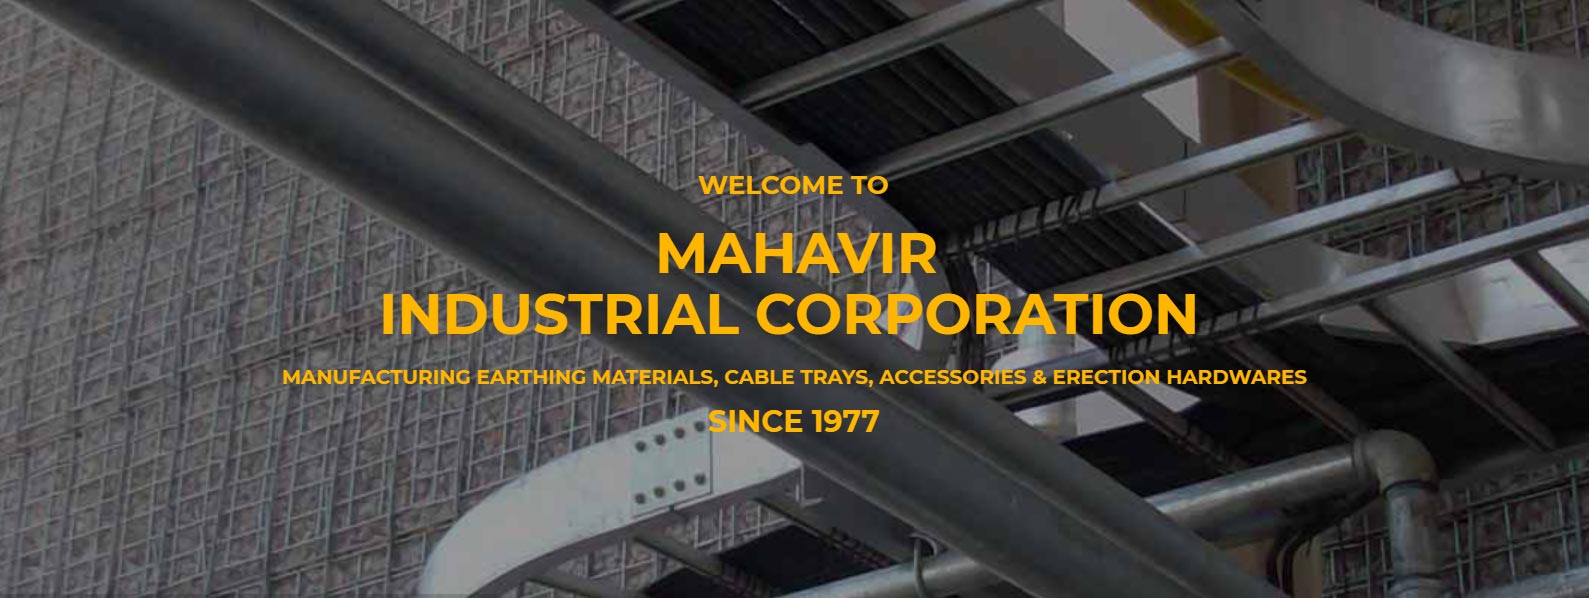 Mahavir Industrial Corporation banner